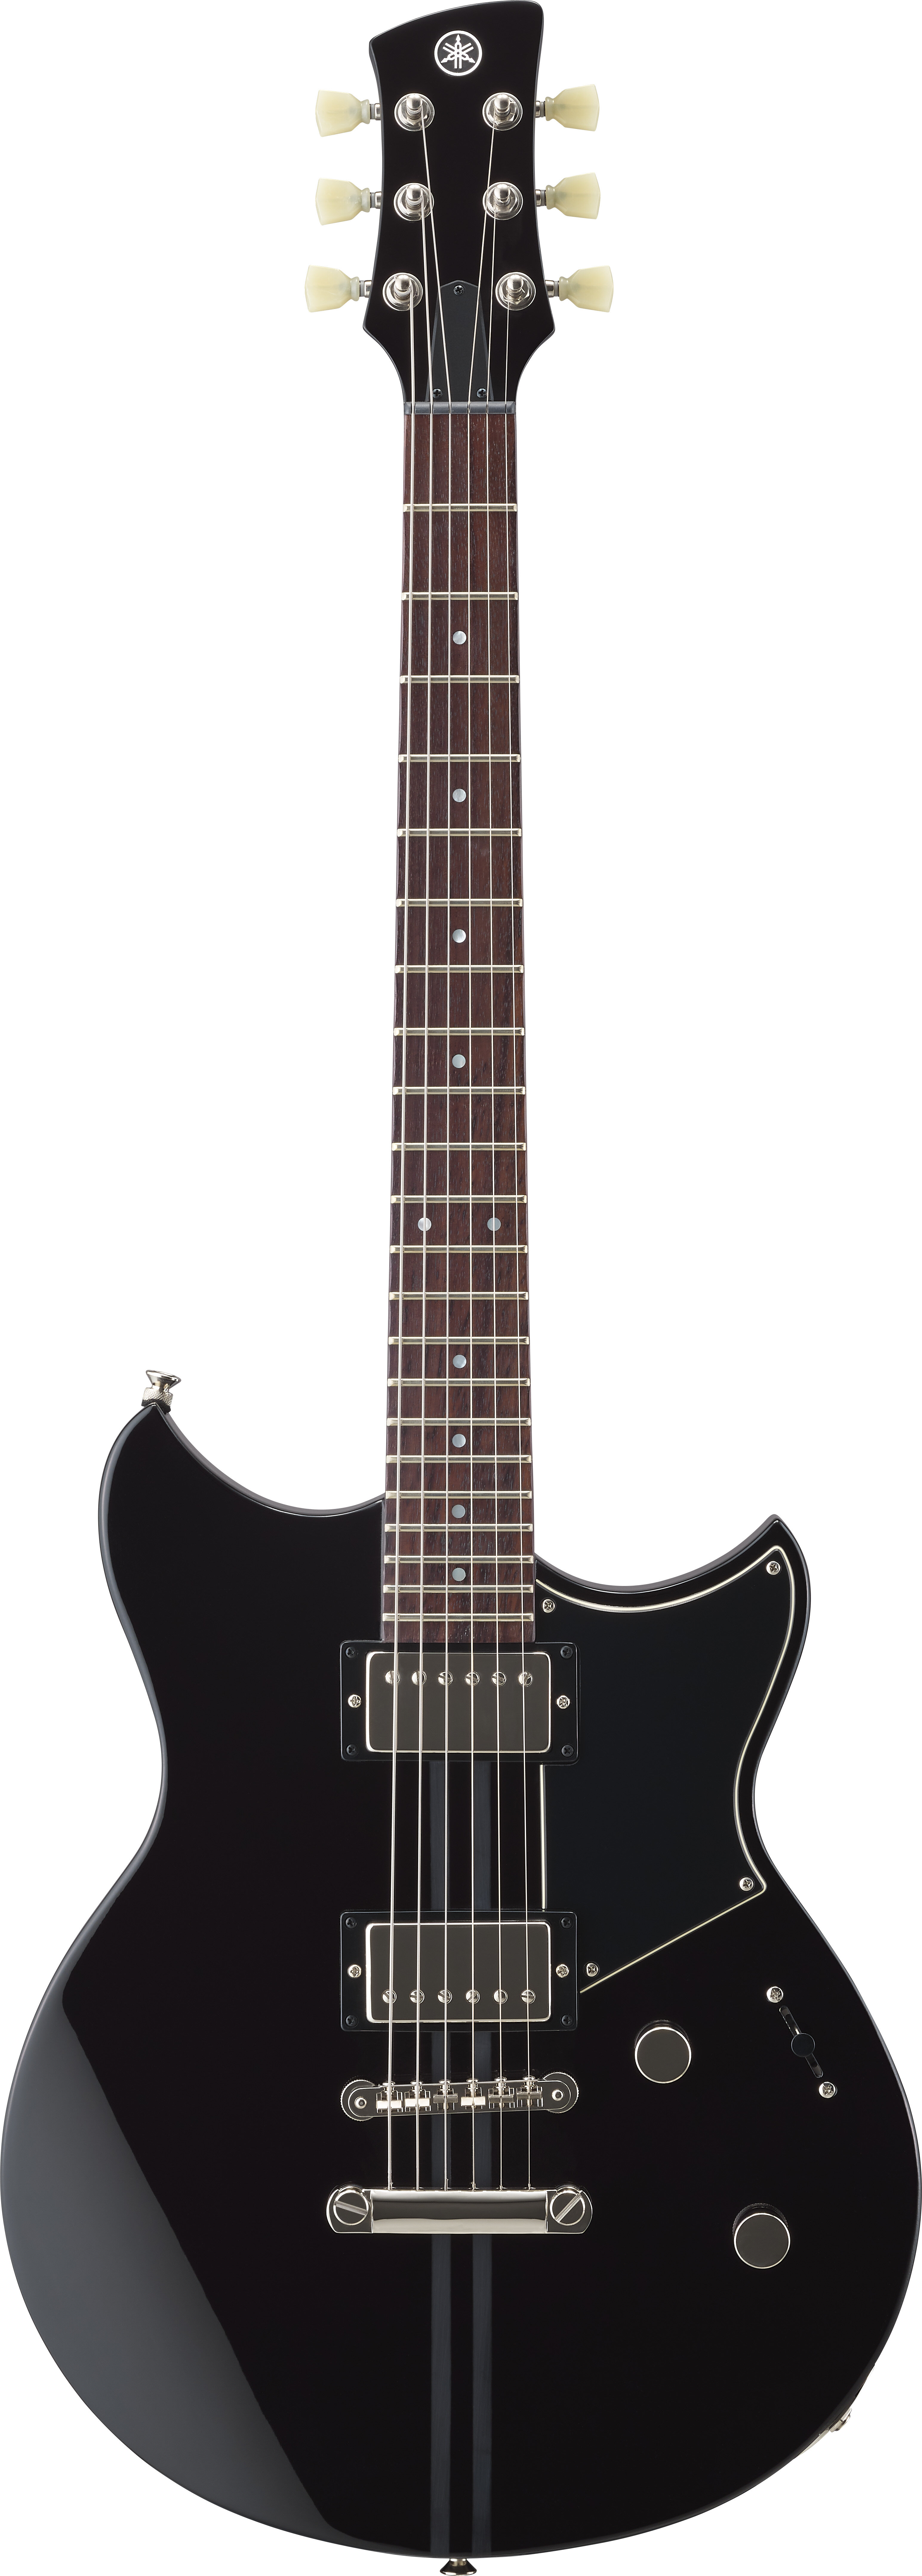 Yamaha Revstar Element RSE20 Electric Guitar Black -  RSE20 BL